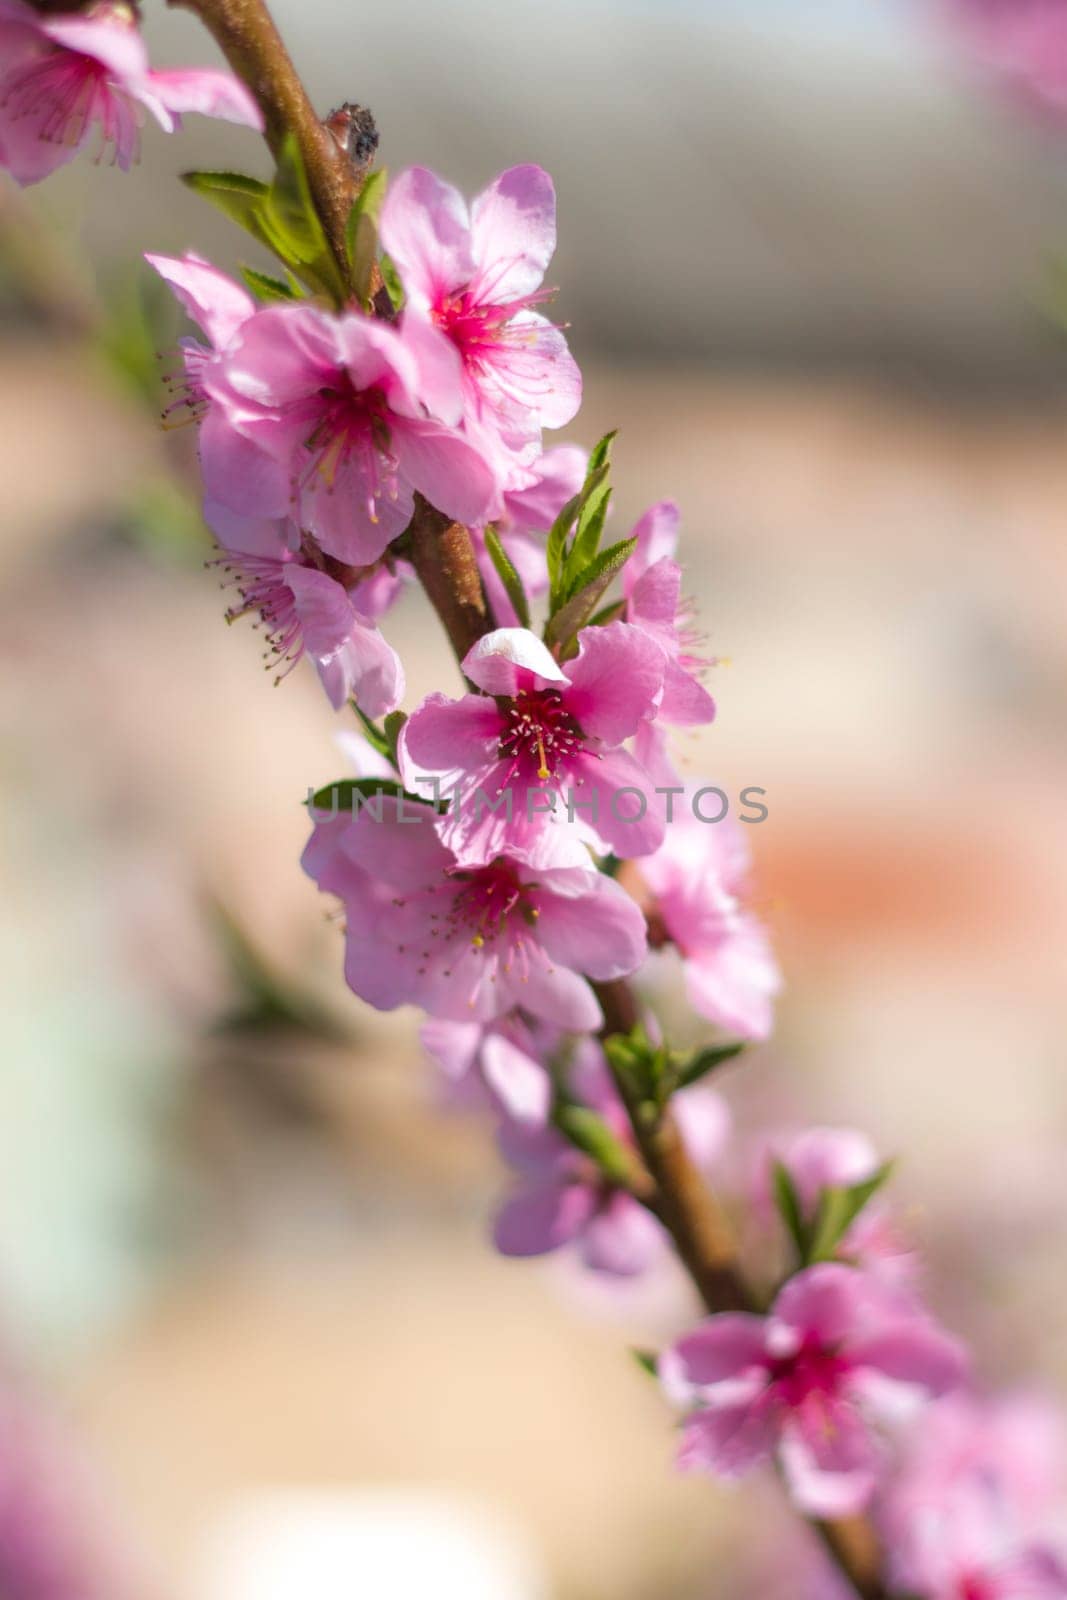 Spring peach nectarine flowers blossom on sunny branch. Agriculture beautiful season farming springtime landscape